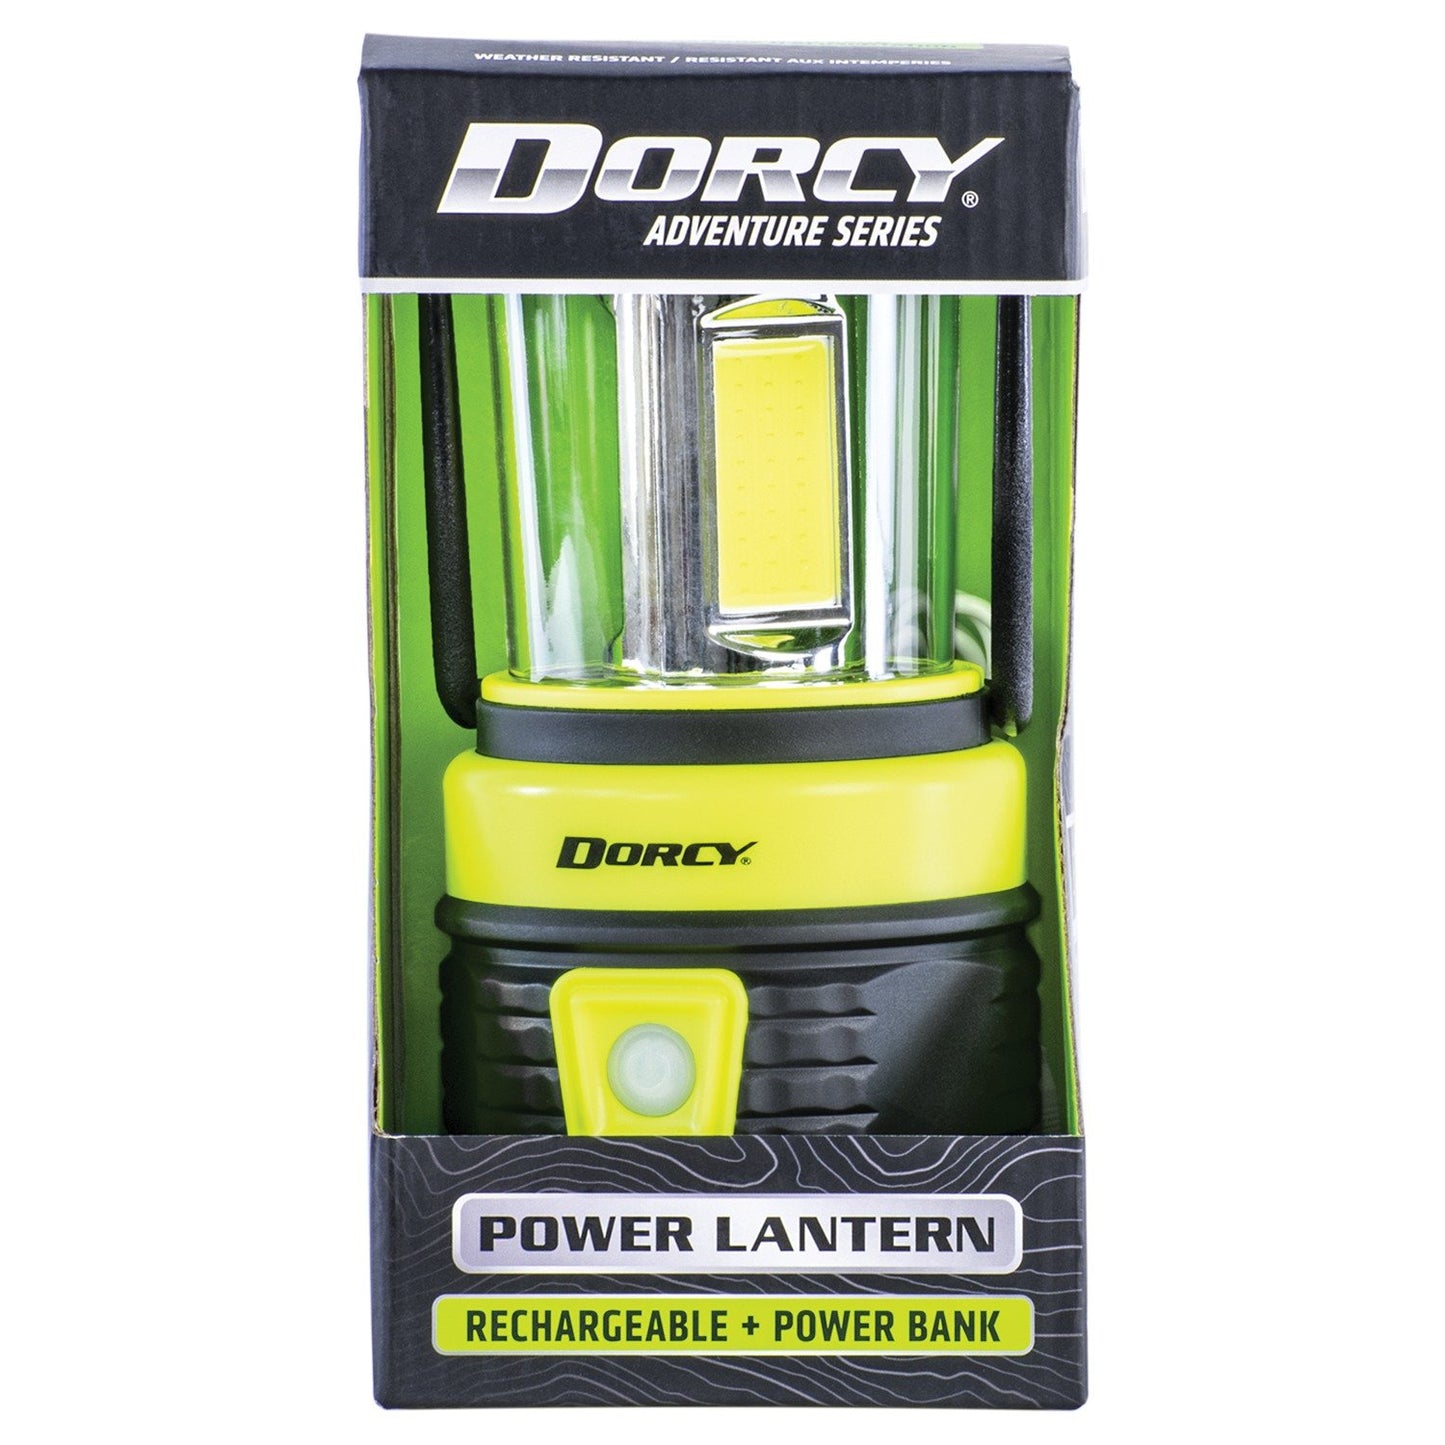 Dorcy 41-3125 1,800-Lumen Rechargeable Adventure Lantern